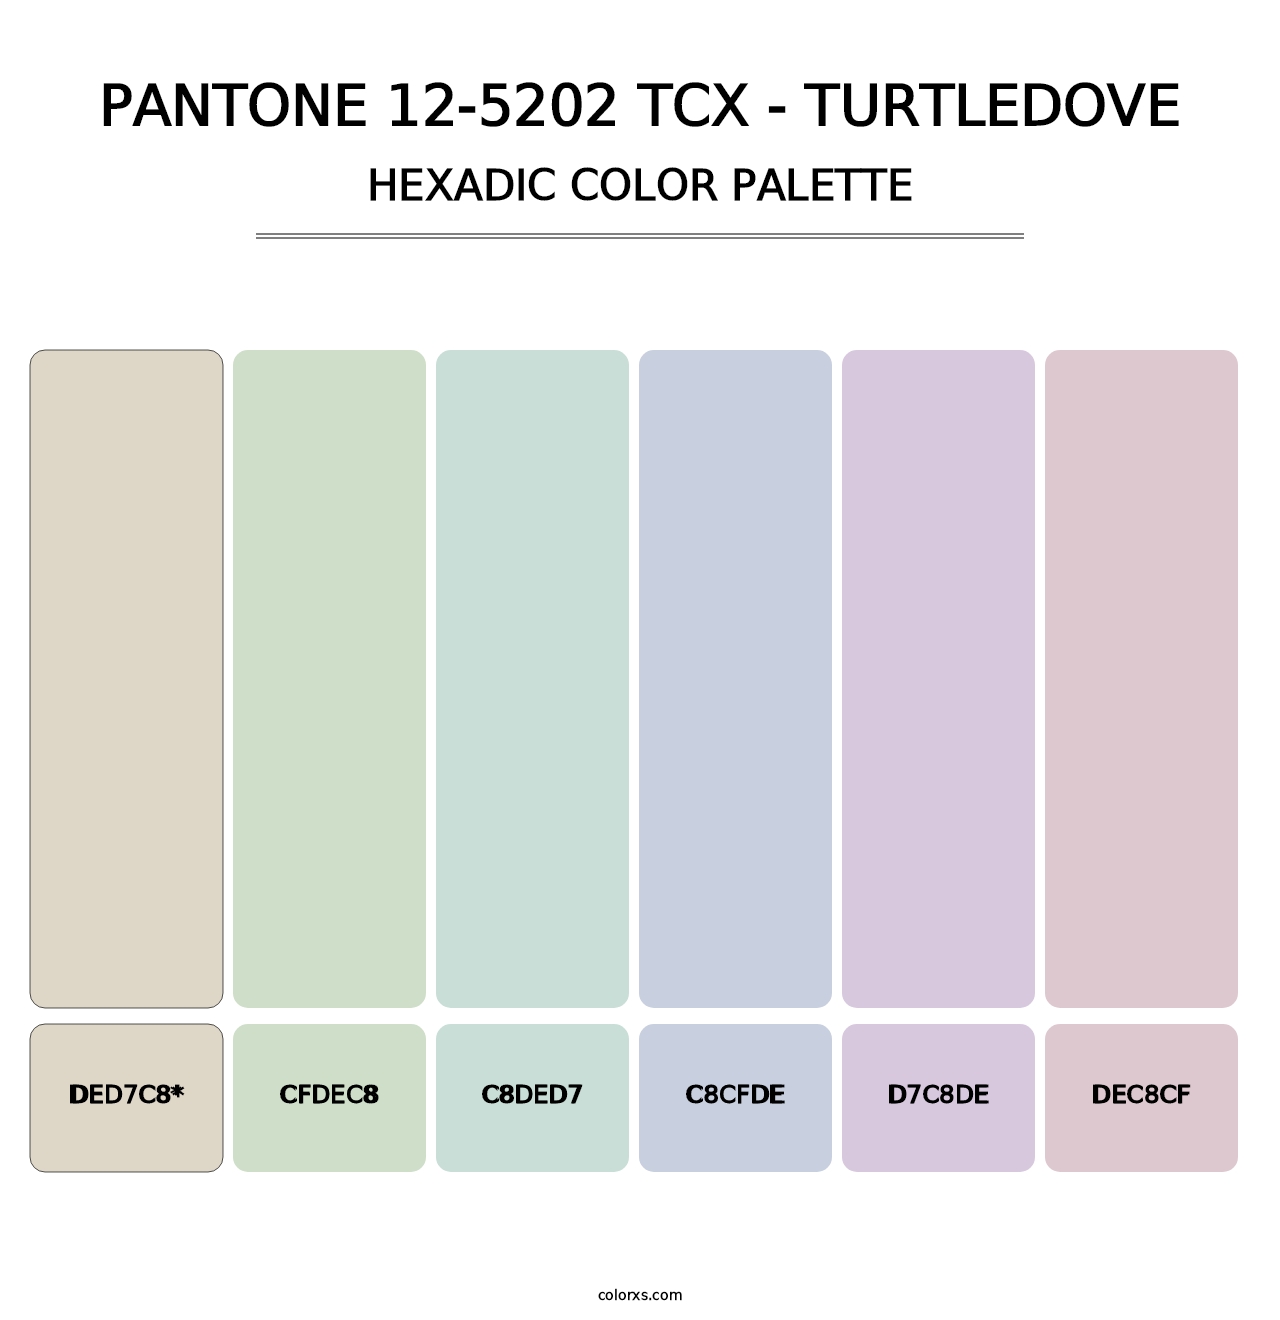 PANTONE 12-5202 TCX - Turtledove - Hexadic Color Palette